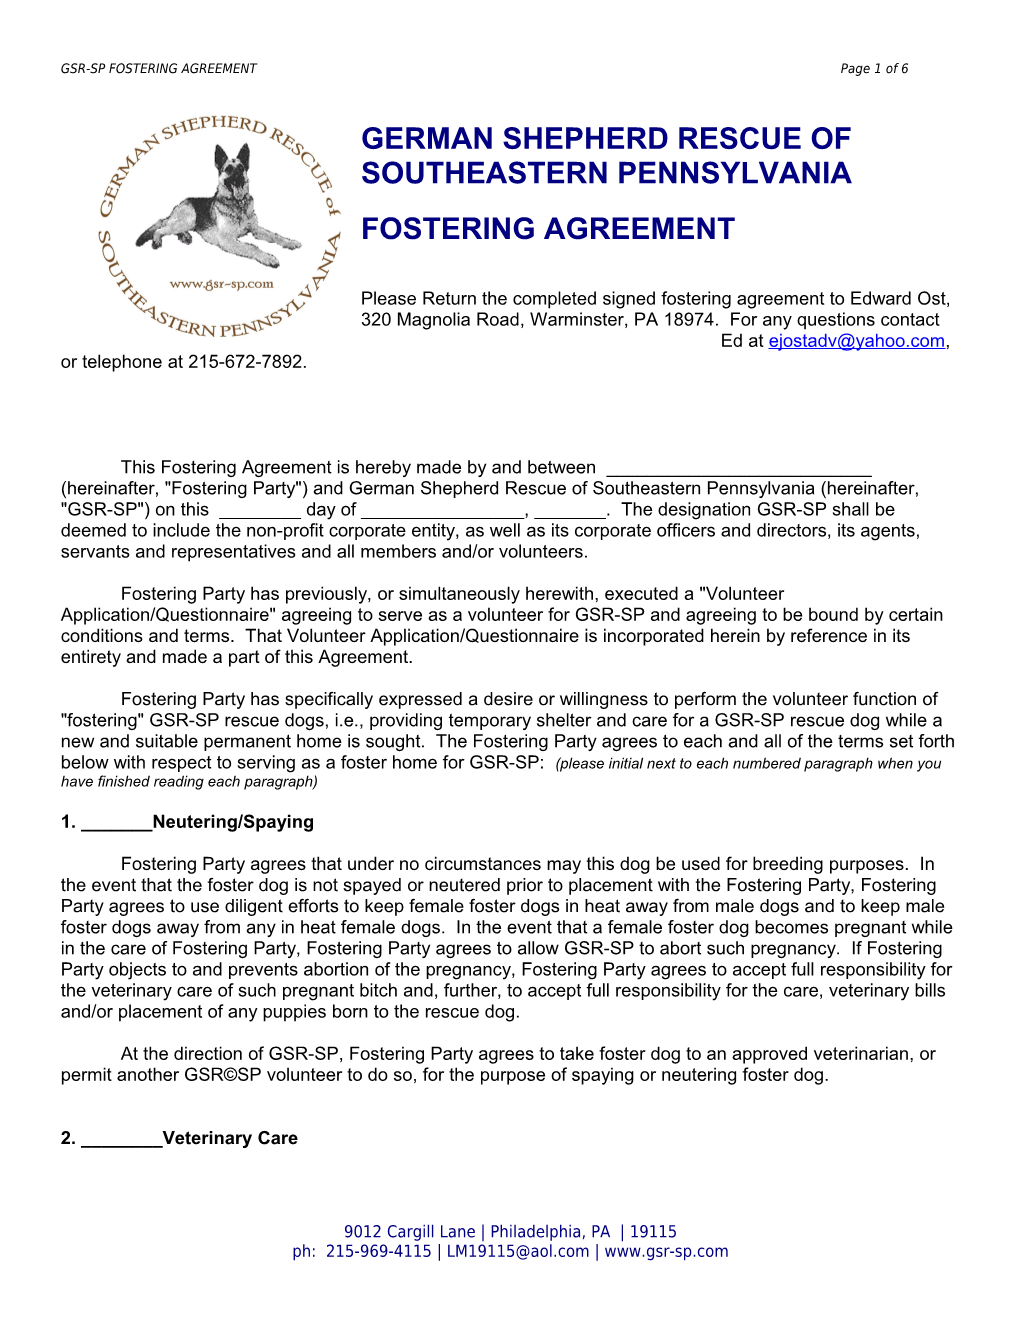 German Shepherd Rescue of Southeastern Pennsylvania Fostering Agreement